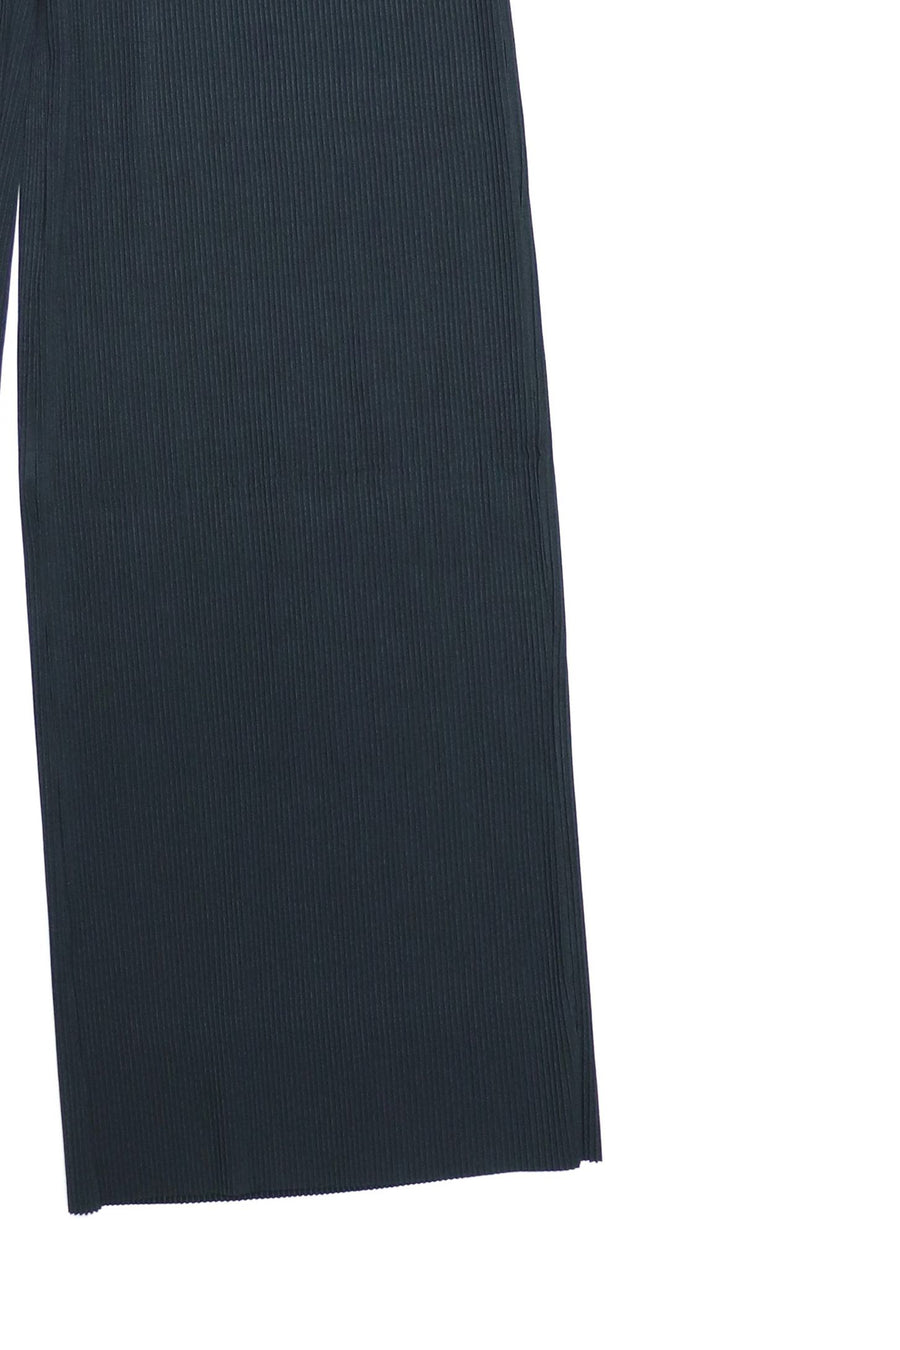 kotohayokozawa  Pleated panel pants(BLACK)